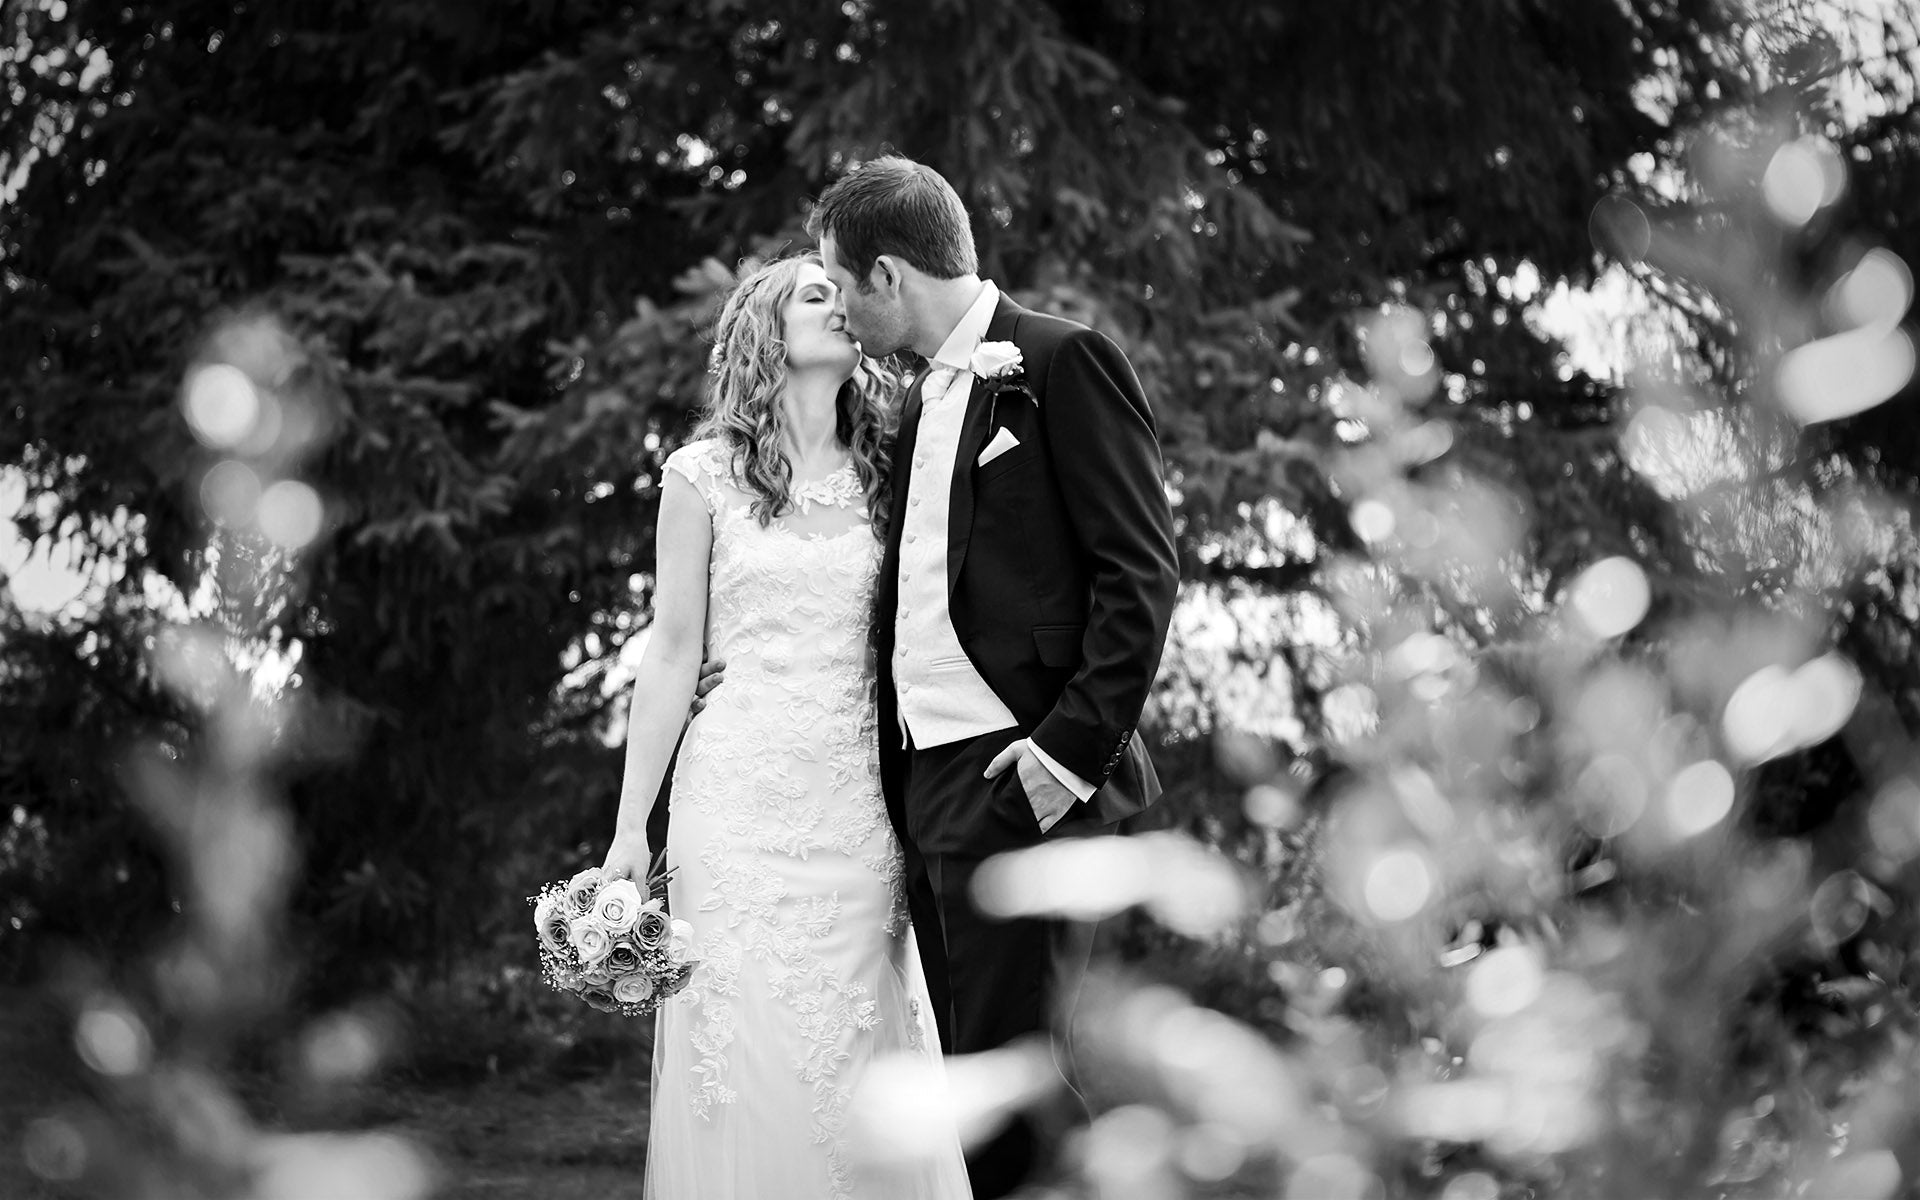 Small Wedding / Elopement Wedding Photography